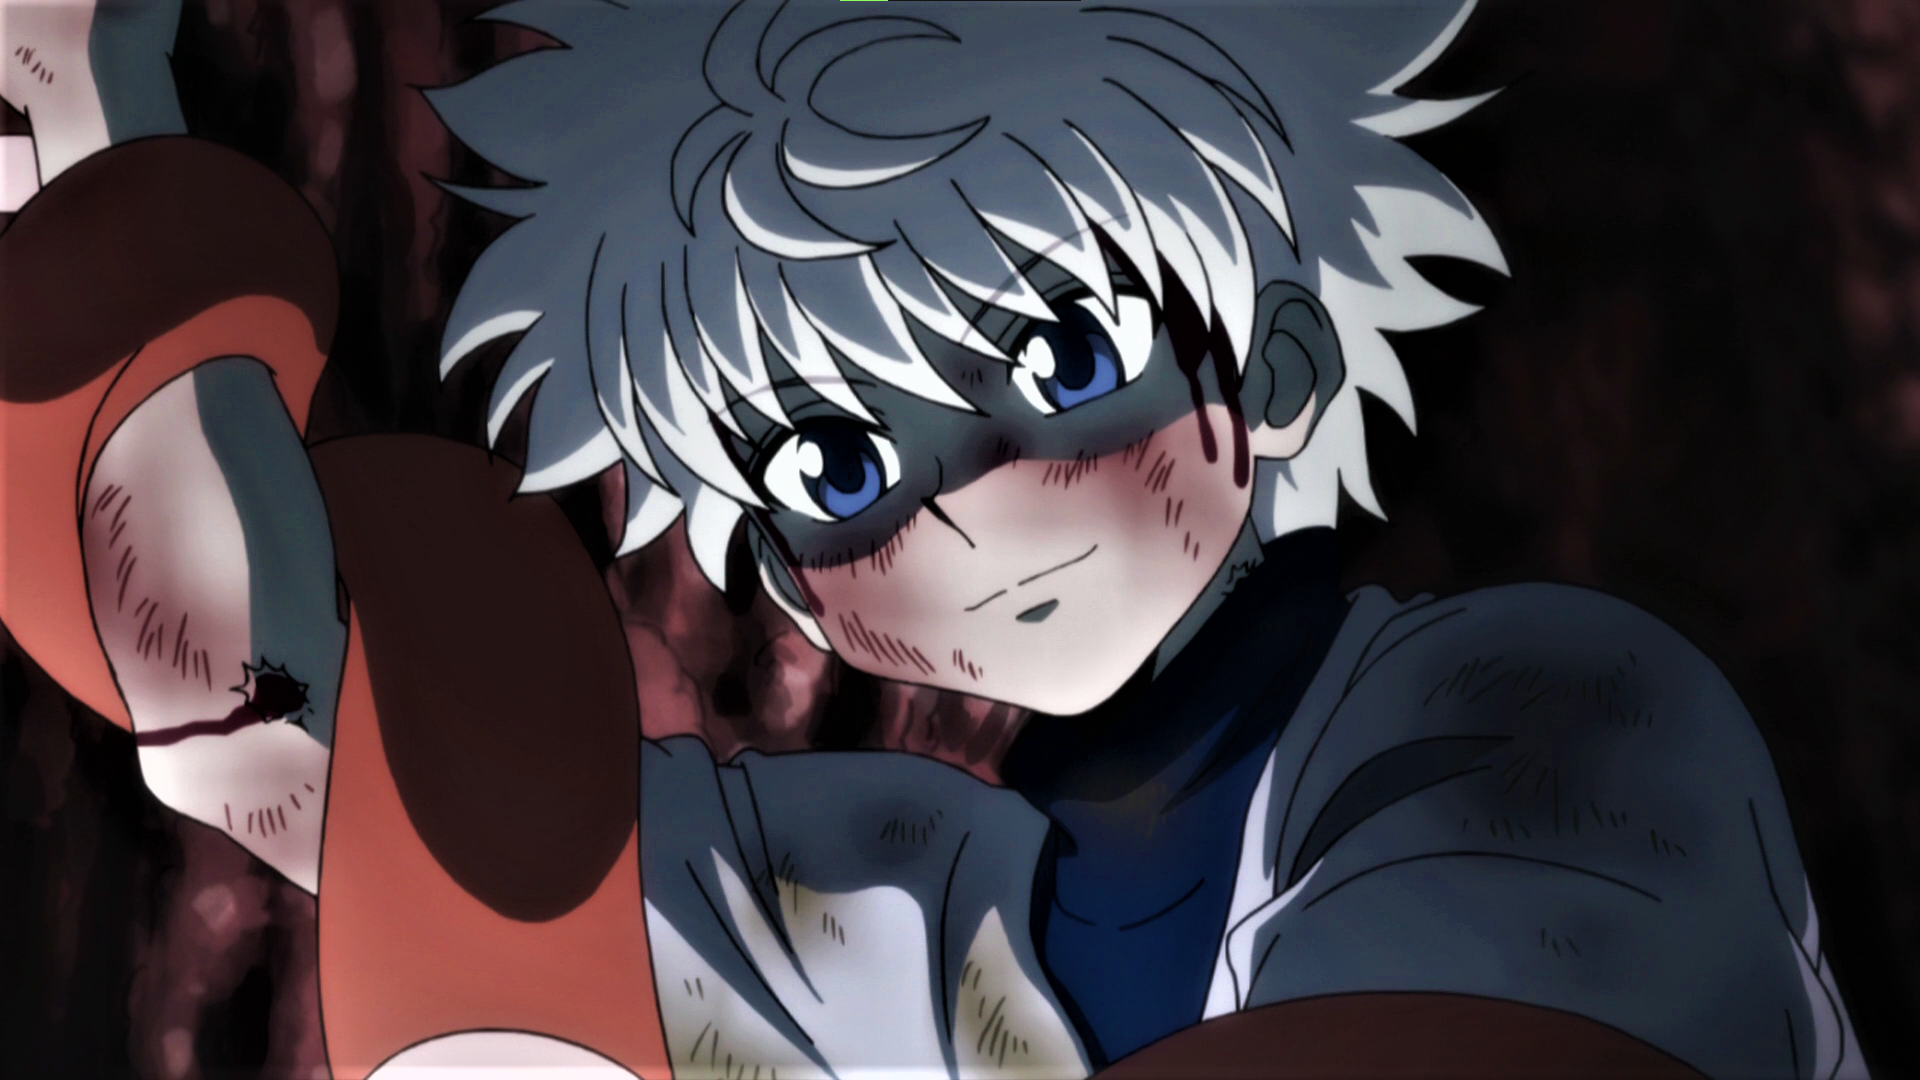 Anime 1920x1080 Hunter x Hunter Killua Zoldyck white hair smiling blood anime Anime screenshot anime boys